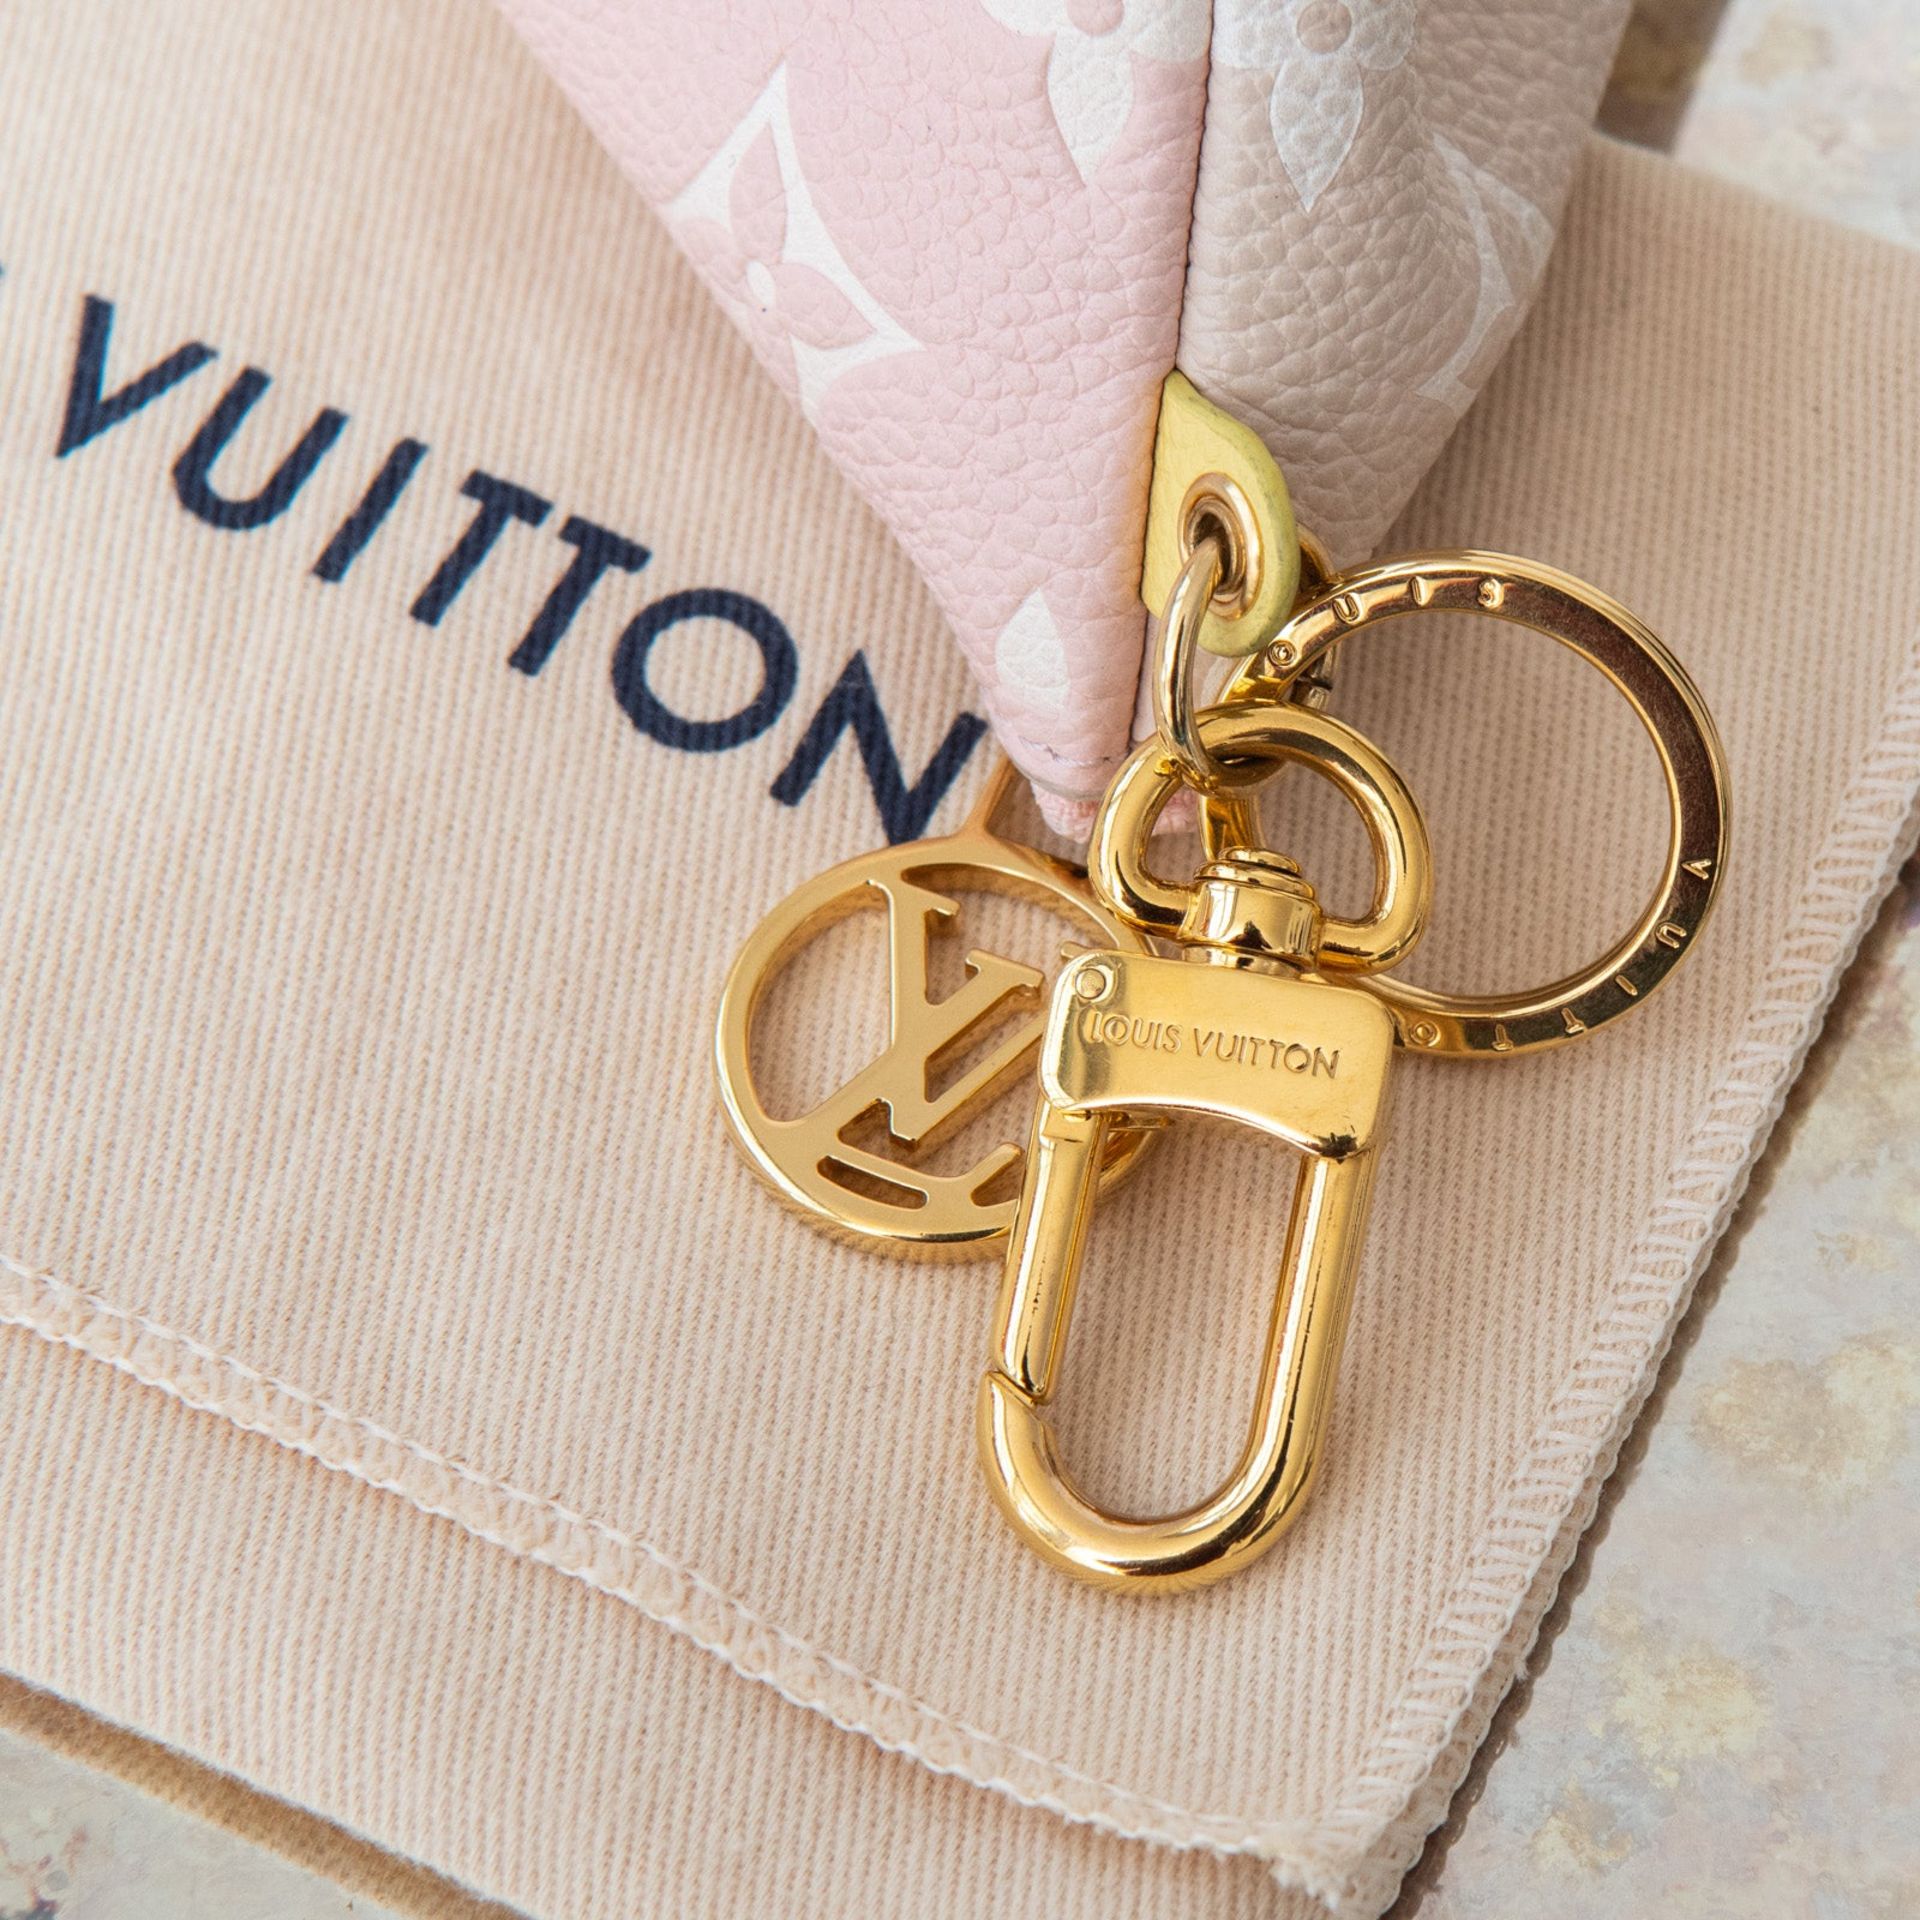 Louis Vuitton Berlingot Bag Charm And Key Holder - Image 4 of 5